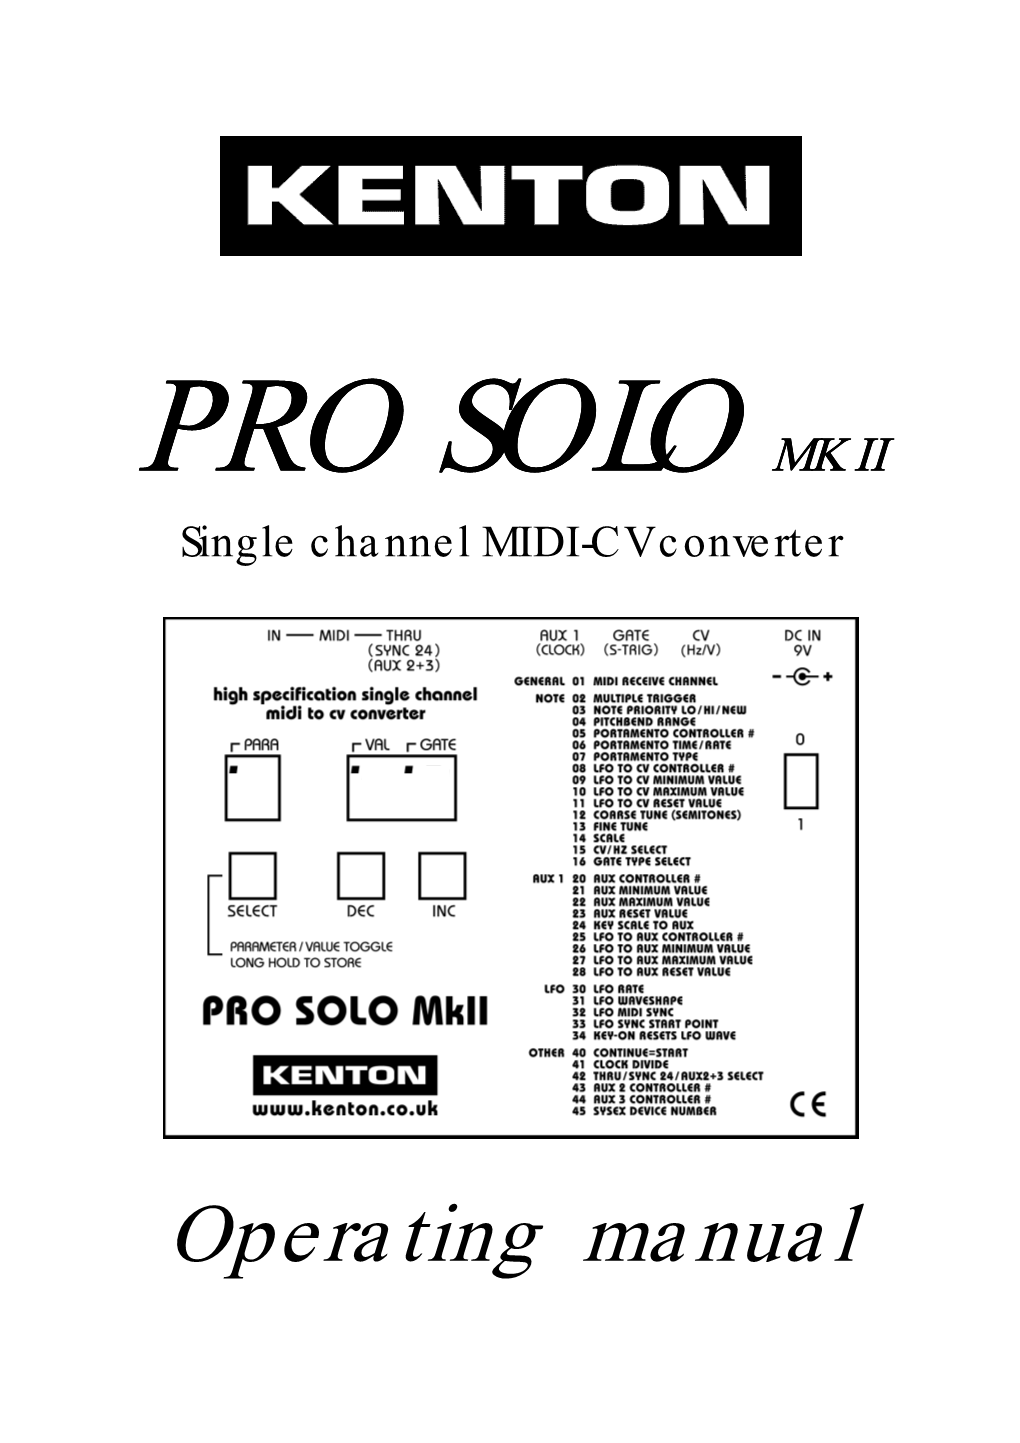 Kenton Pro Solo II